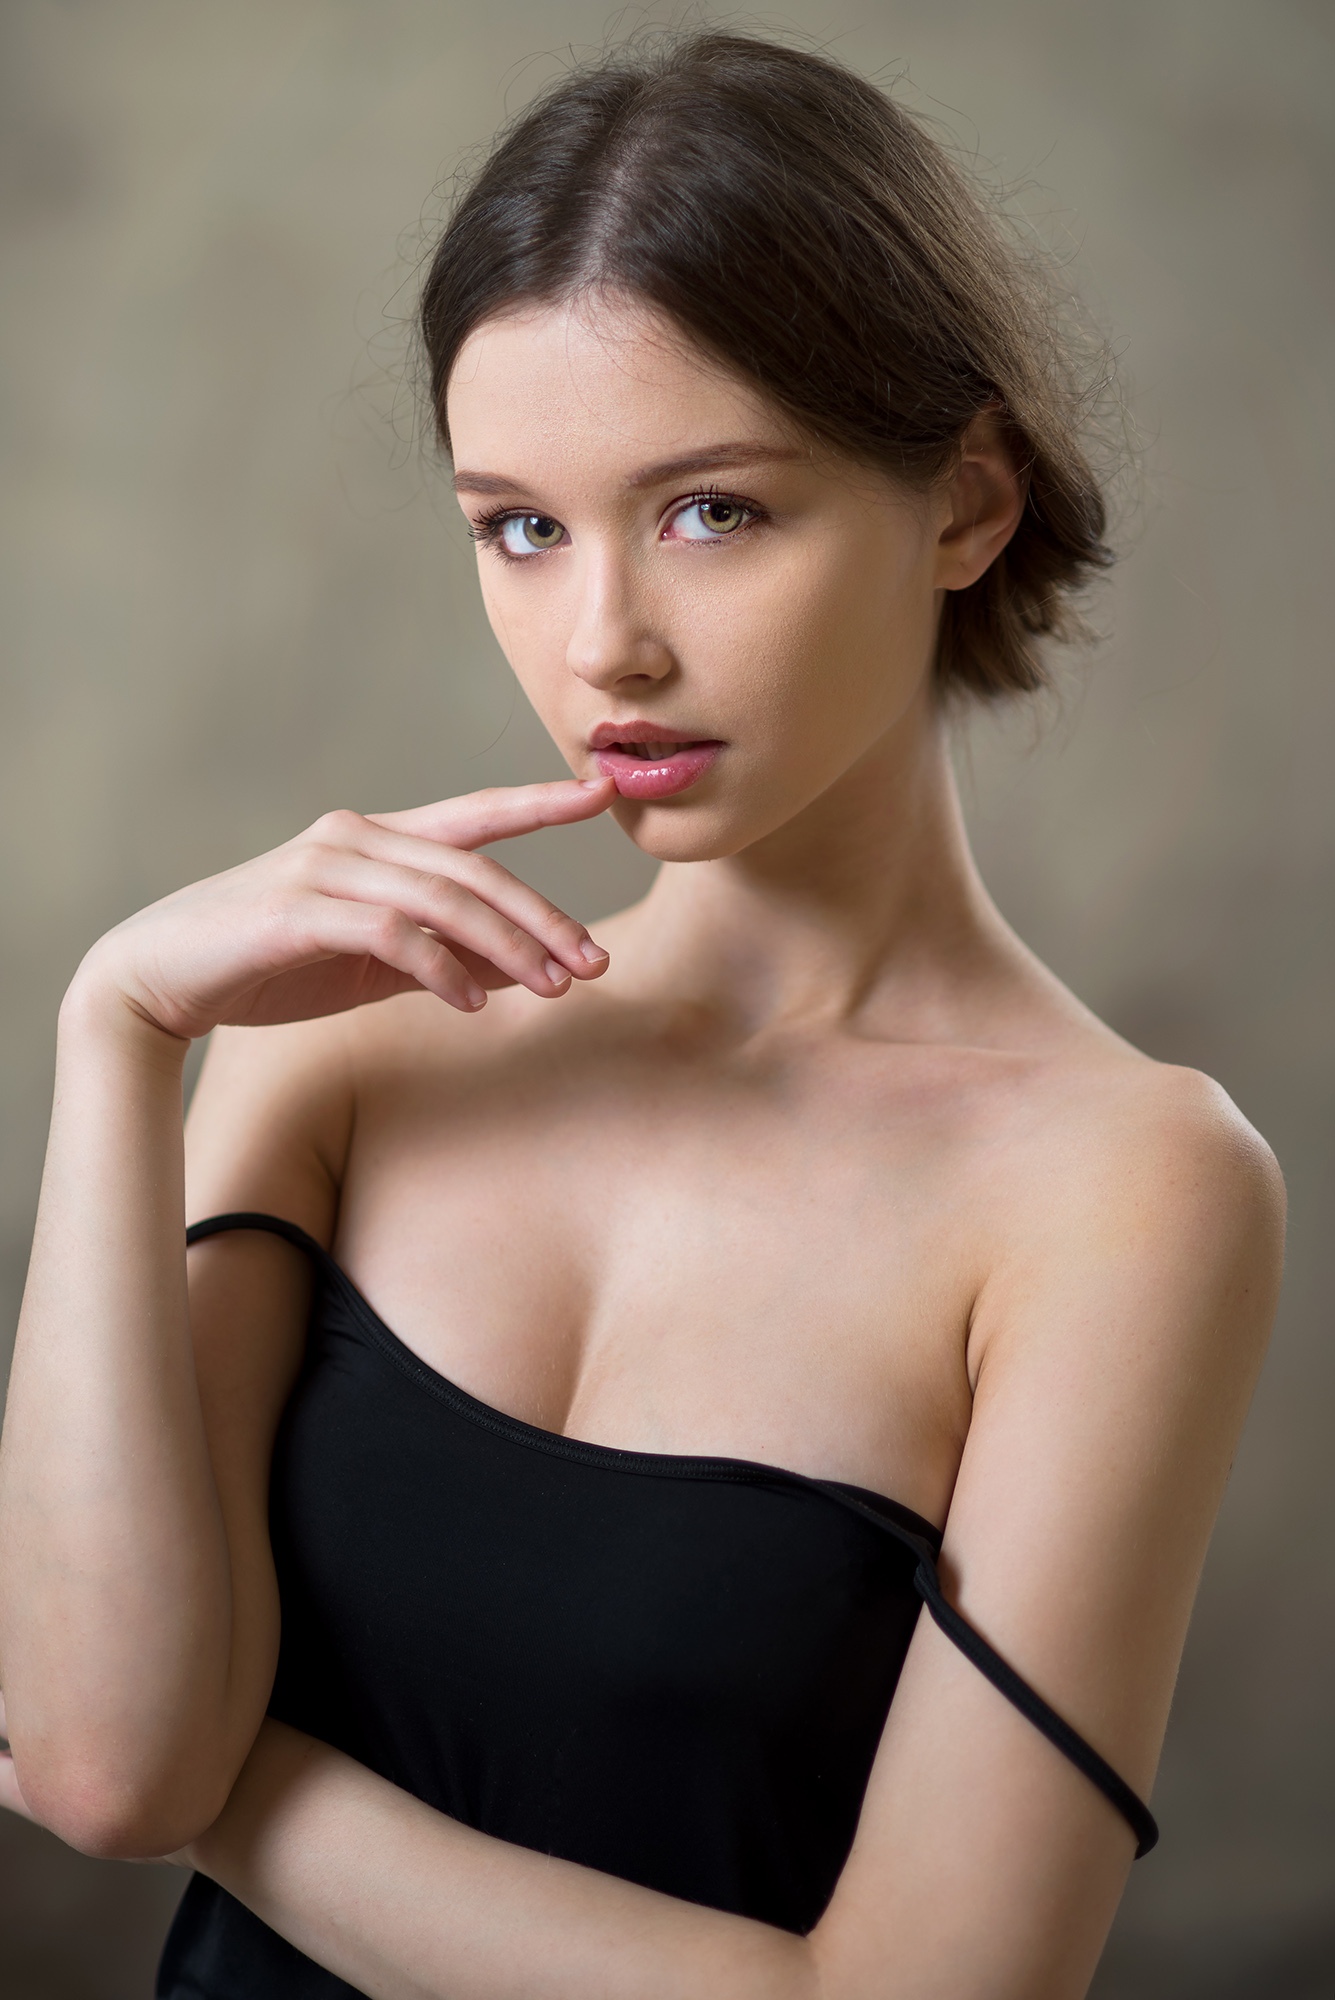 Sergey Prozvitsky Women Brunette Hairbun Brown Eyes Looking At Viewer Portrait Finger On Lips Bare S 1335x2000